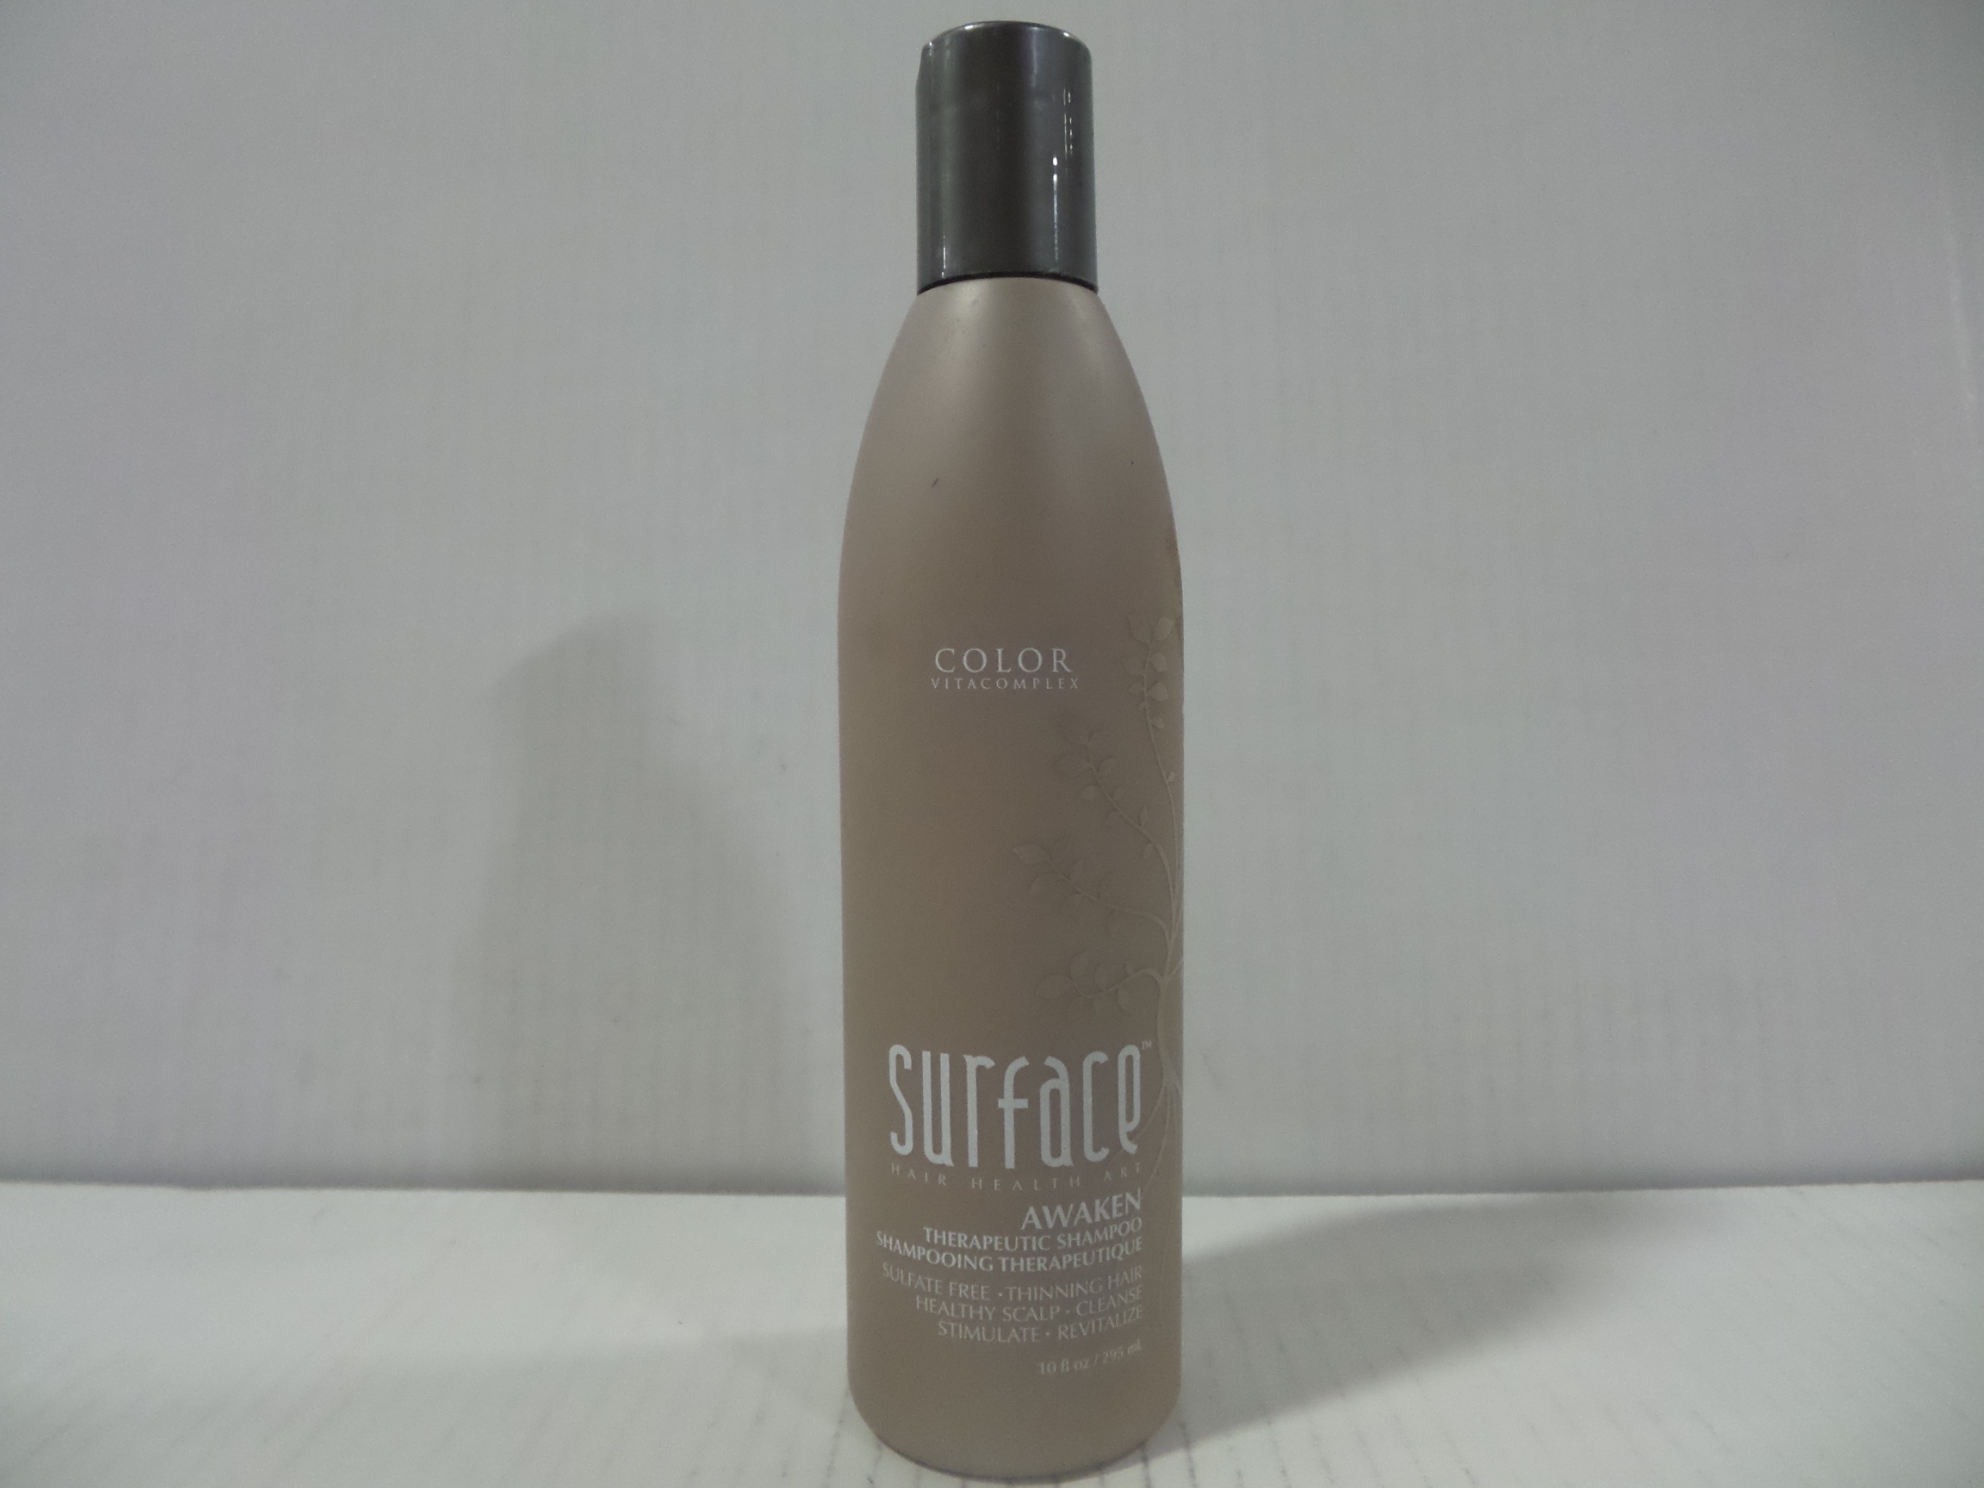 surface awaken shampoo for lice